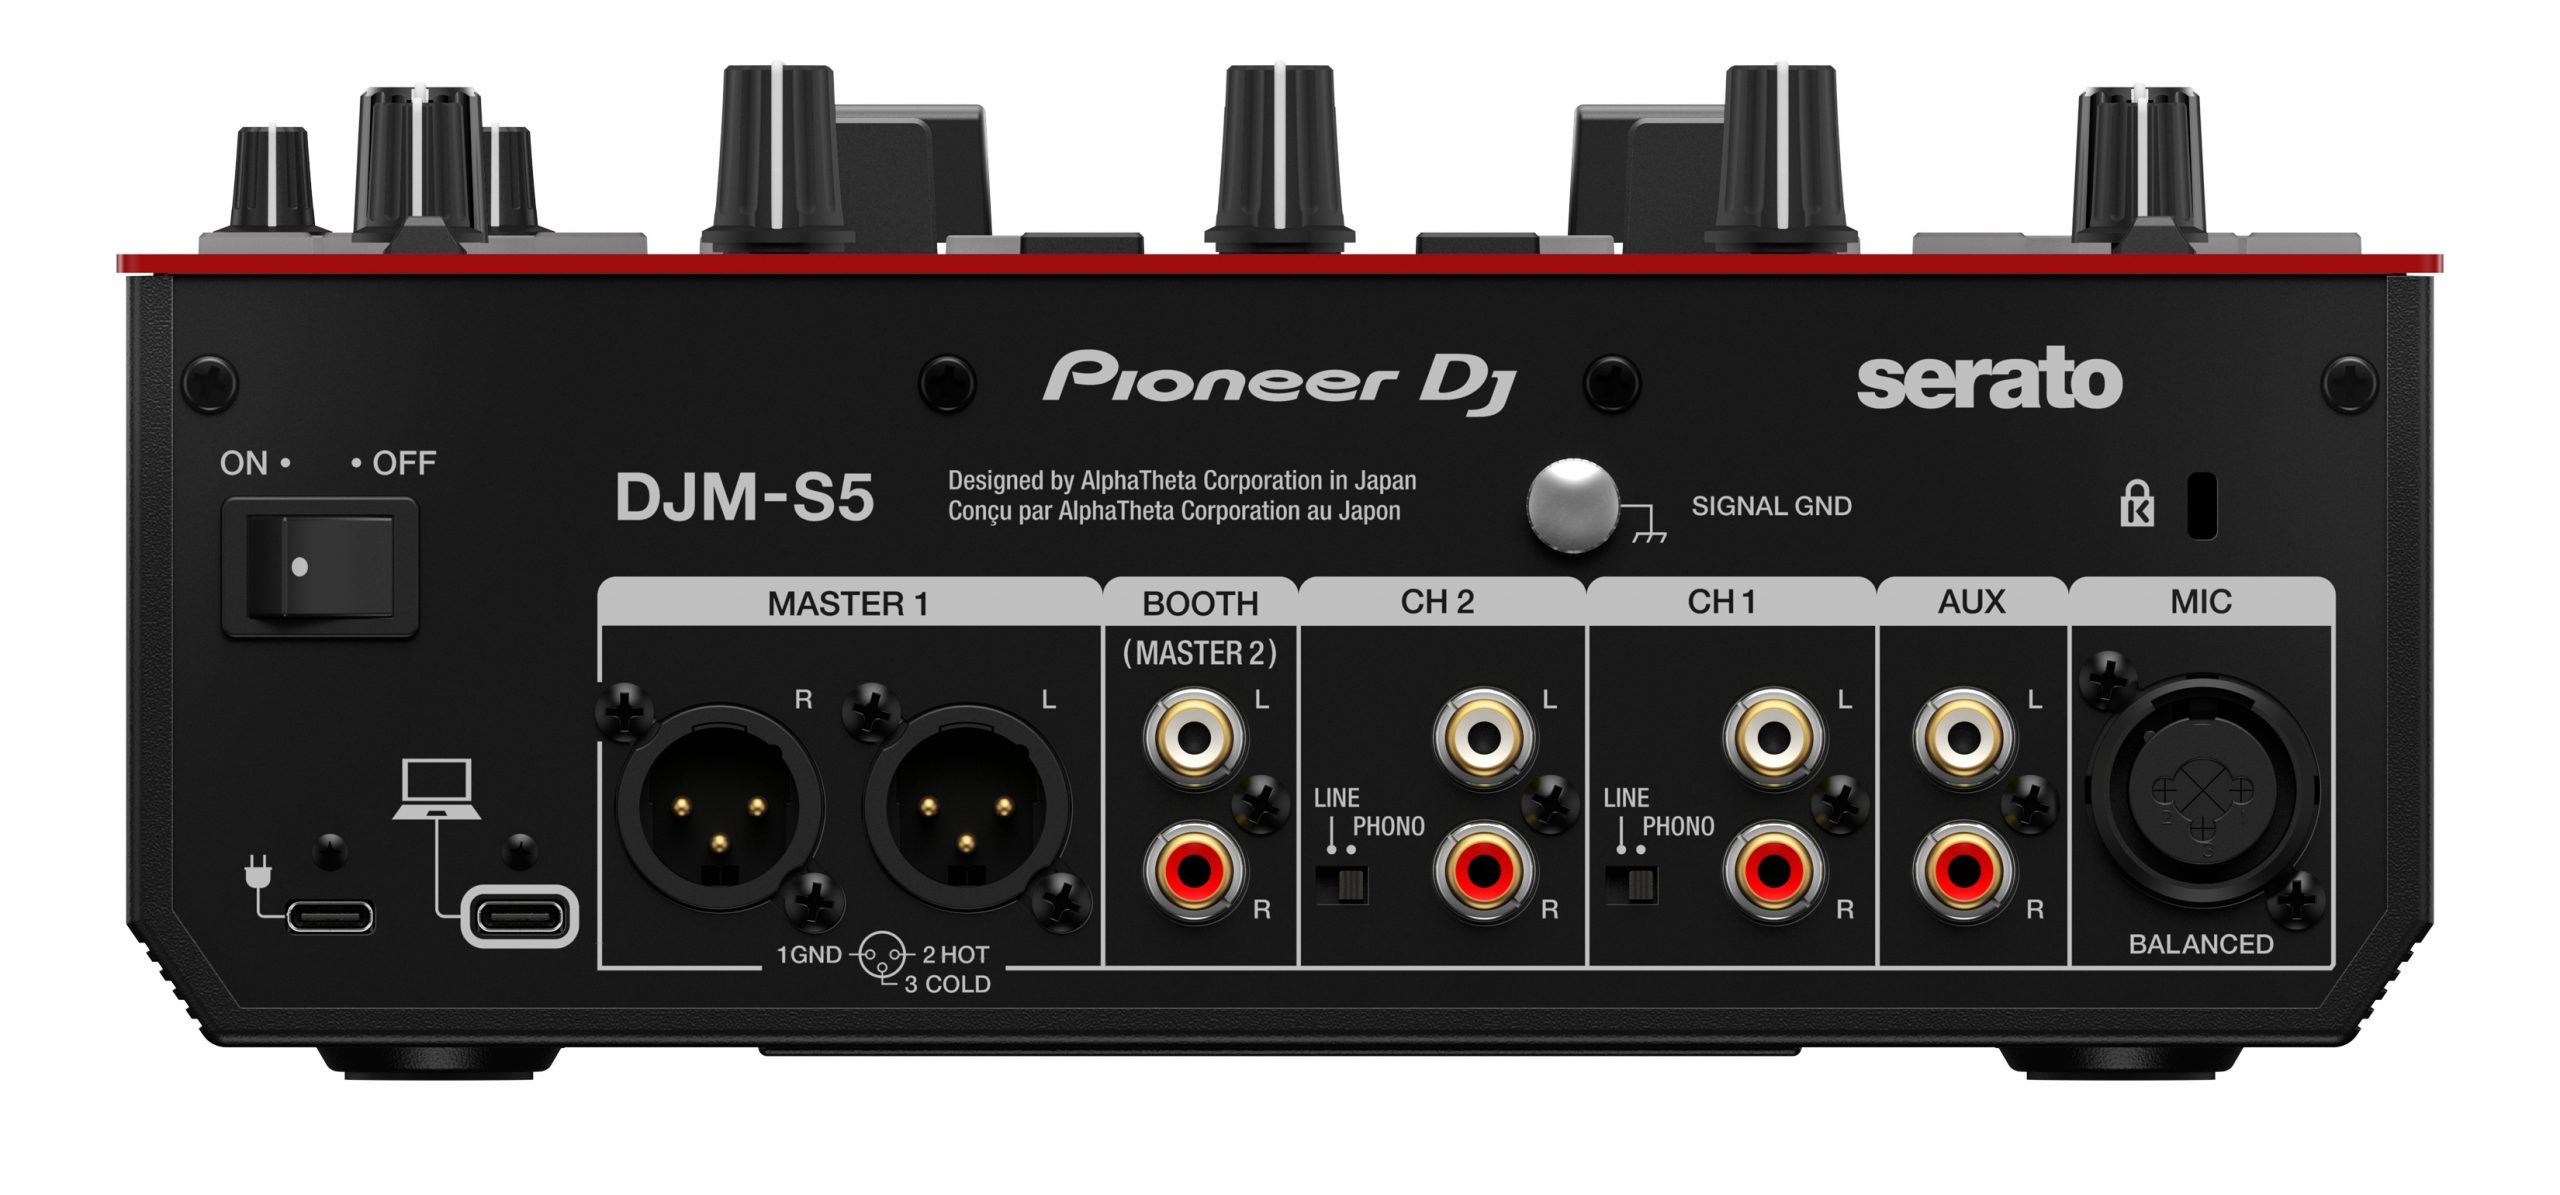 Pioneer Dj Djm S5 - DJ mixer - Variation 4